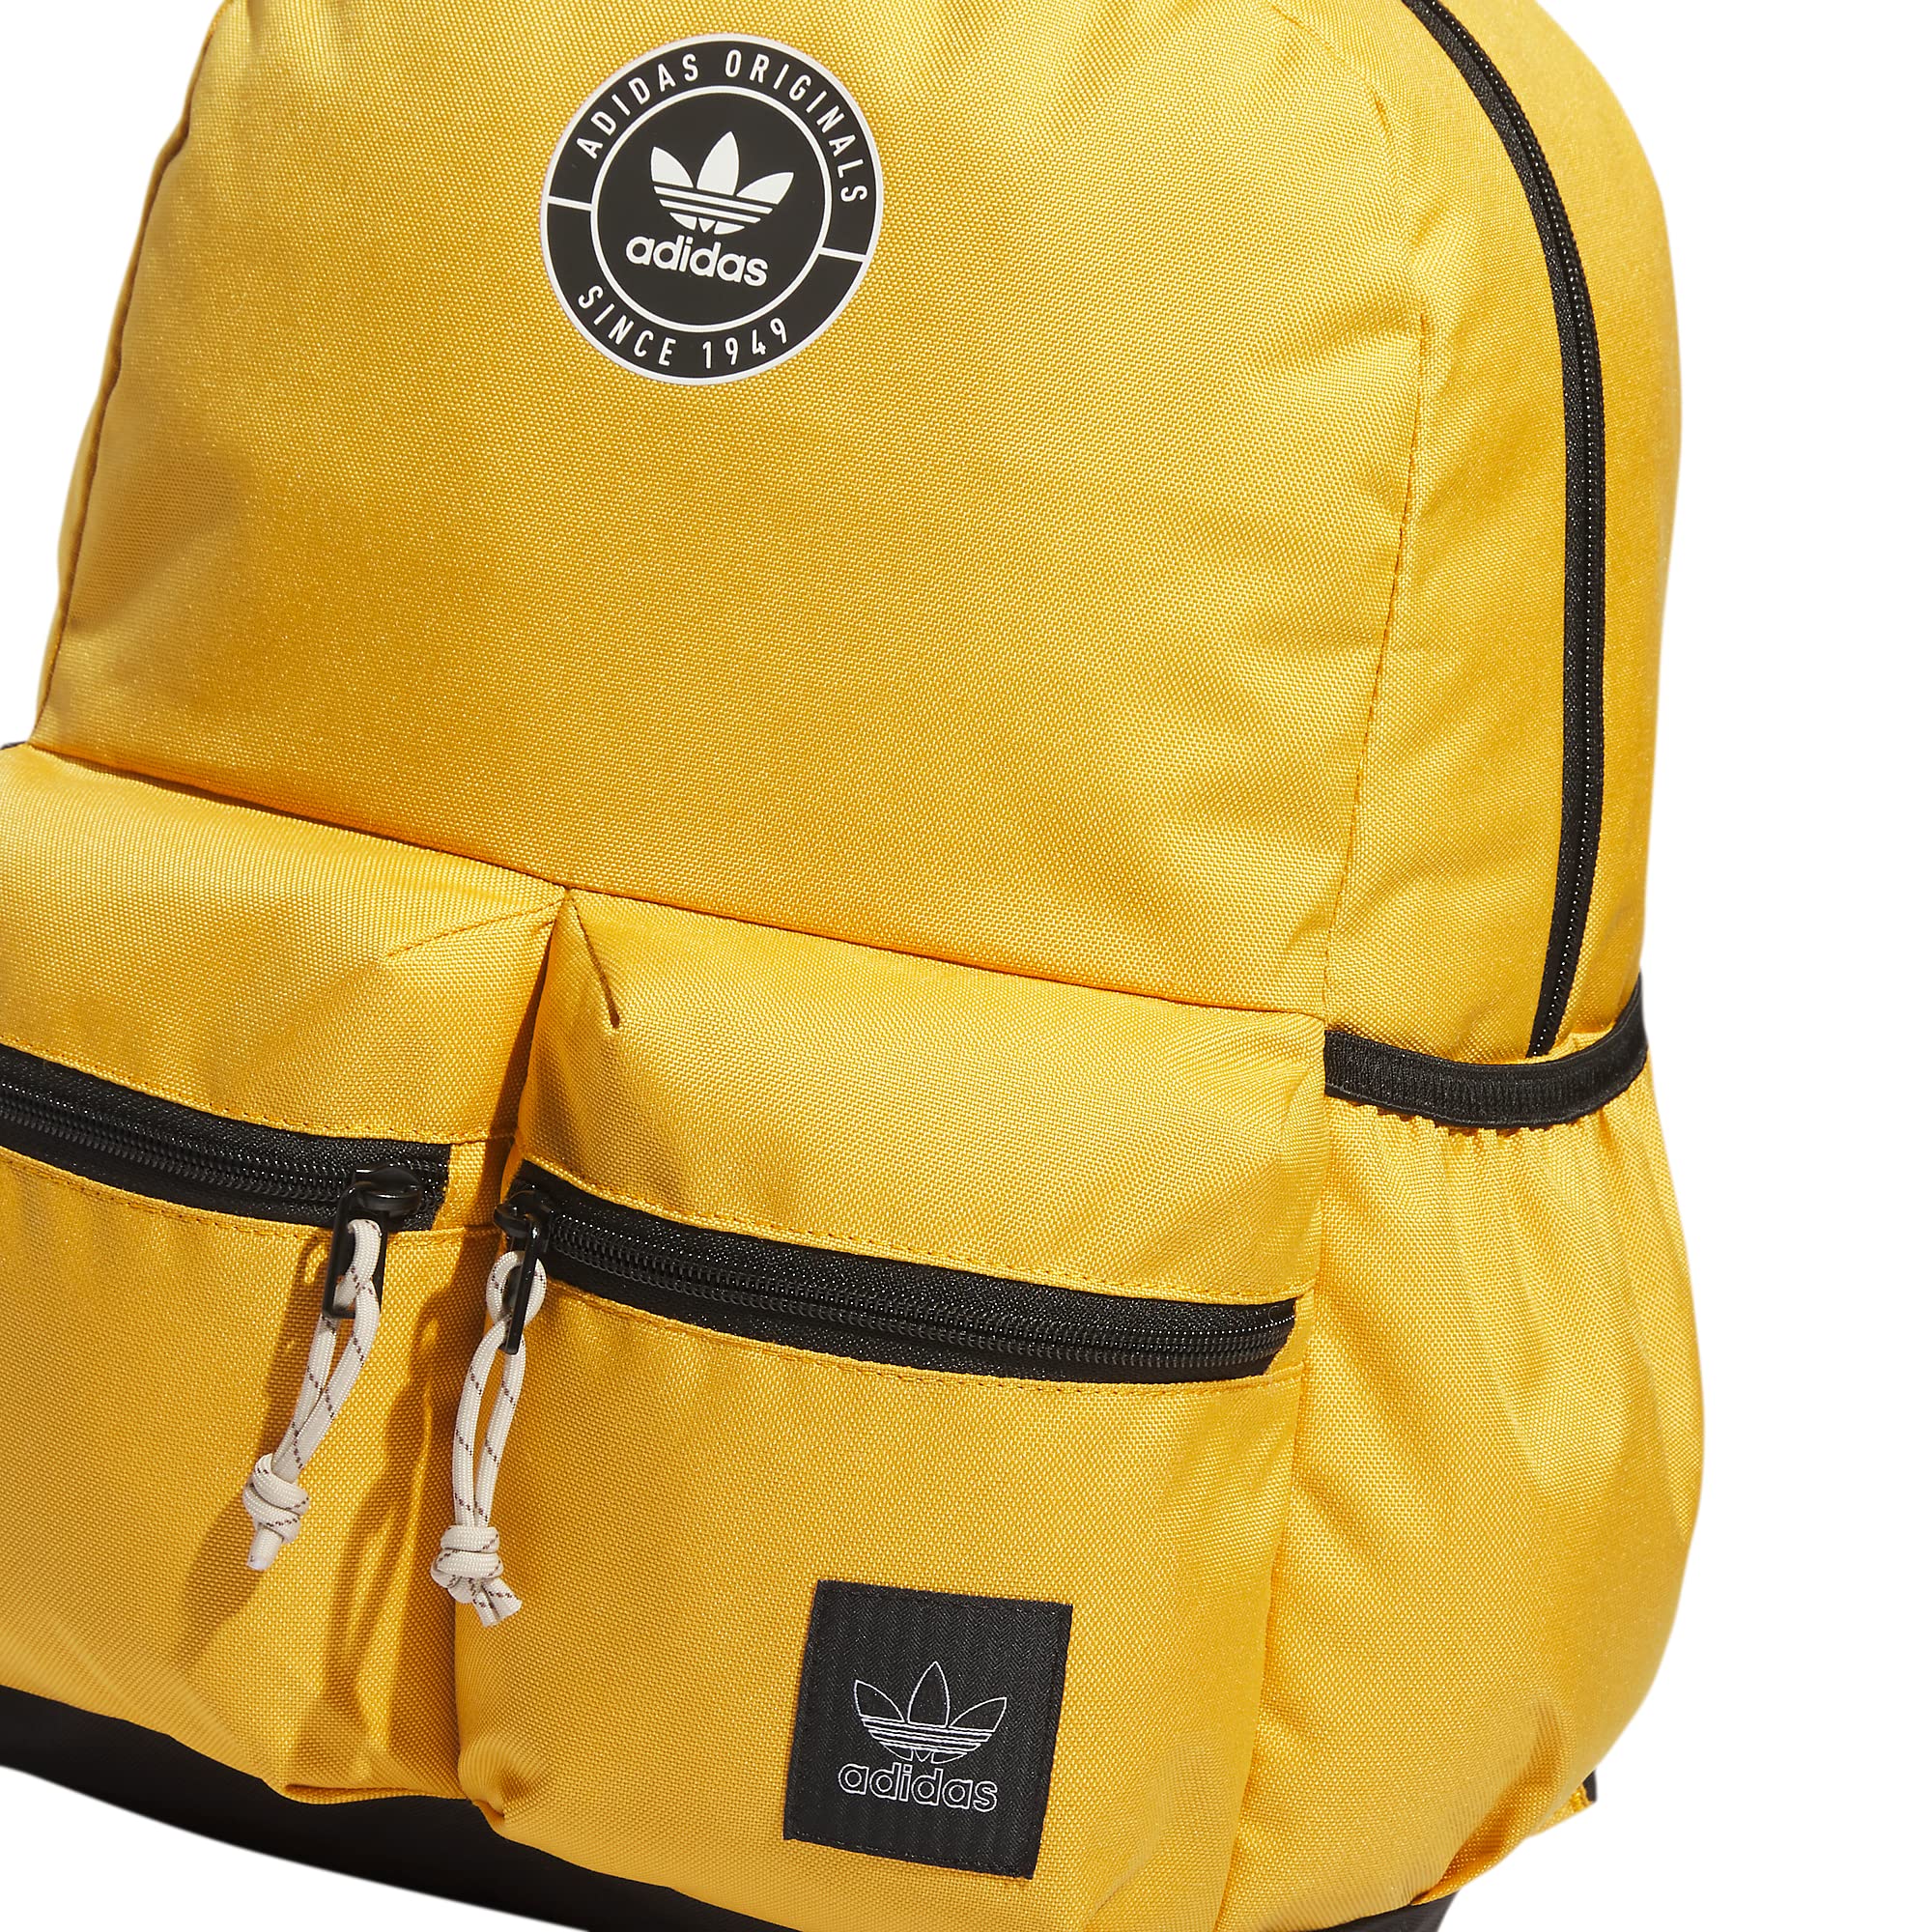 adidas Originals Trefoil 3.0 Backpack, Preloved Yellow/Wonder Beige/Black, One Size